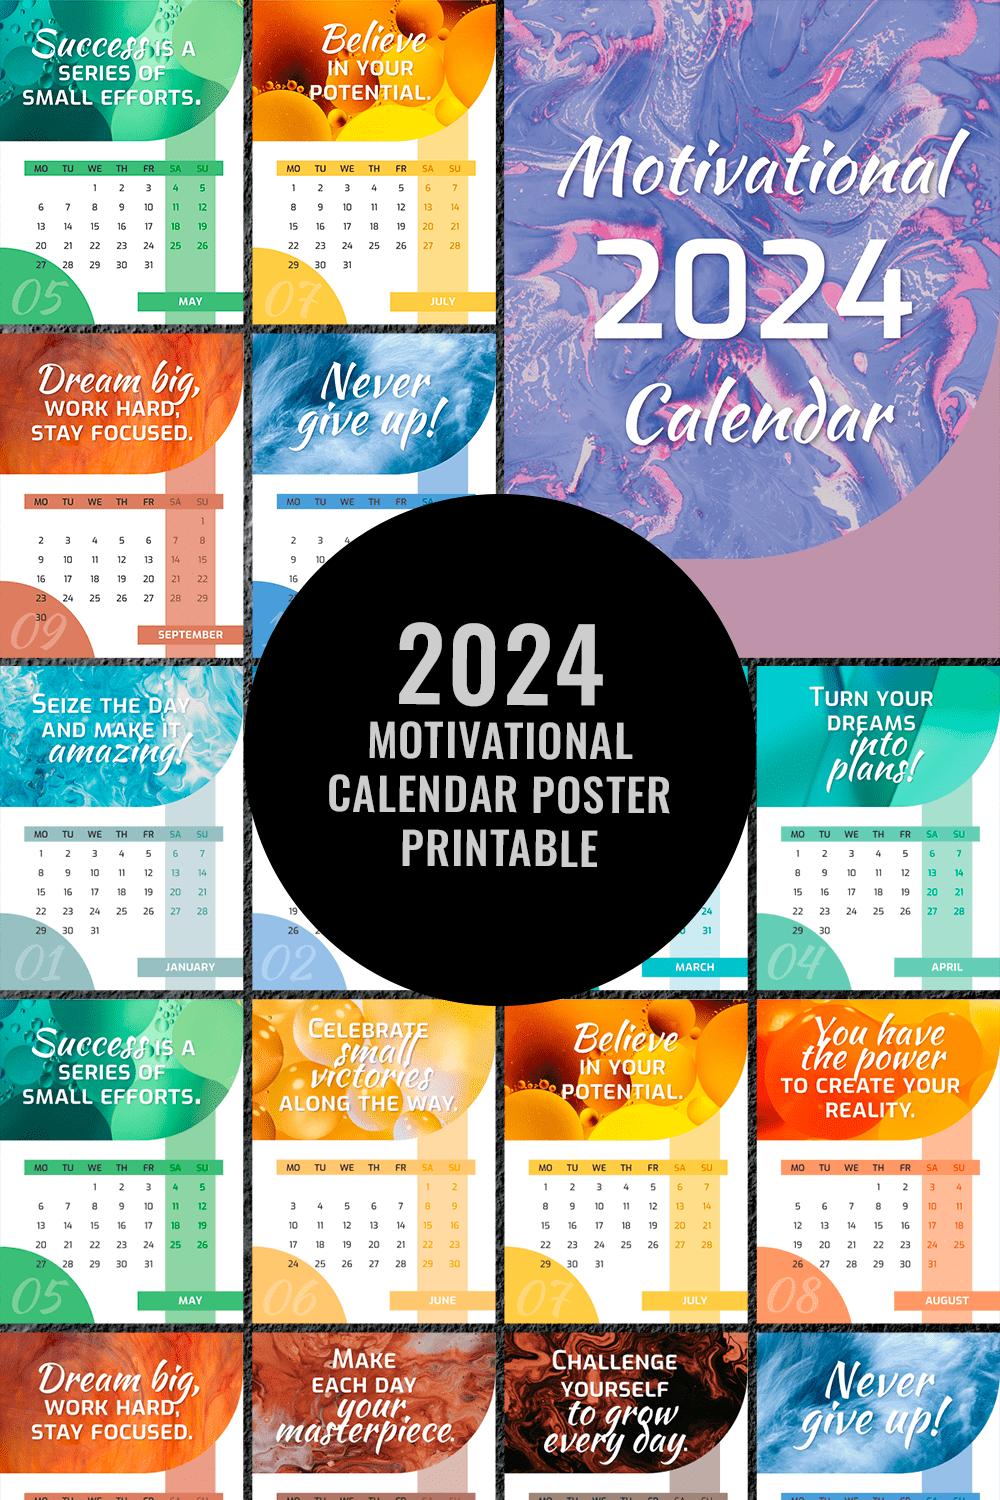 2024 Motivational Calendar Poster Printable [Sphinx Creatus] pinterest preview image.